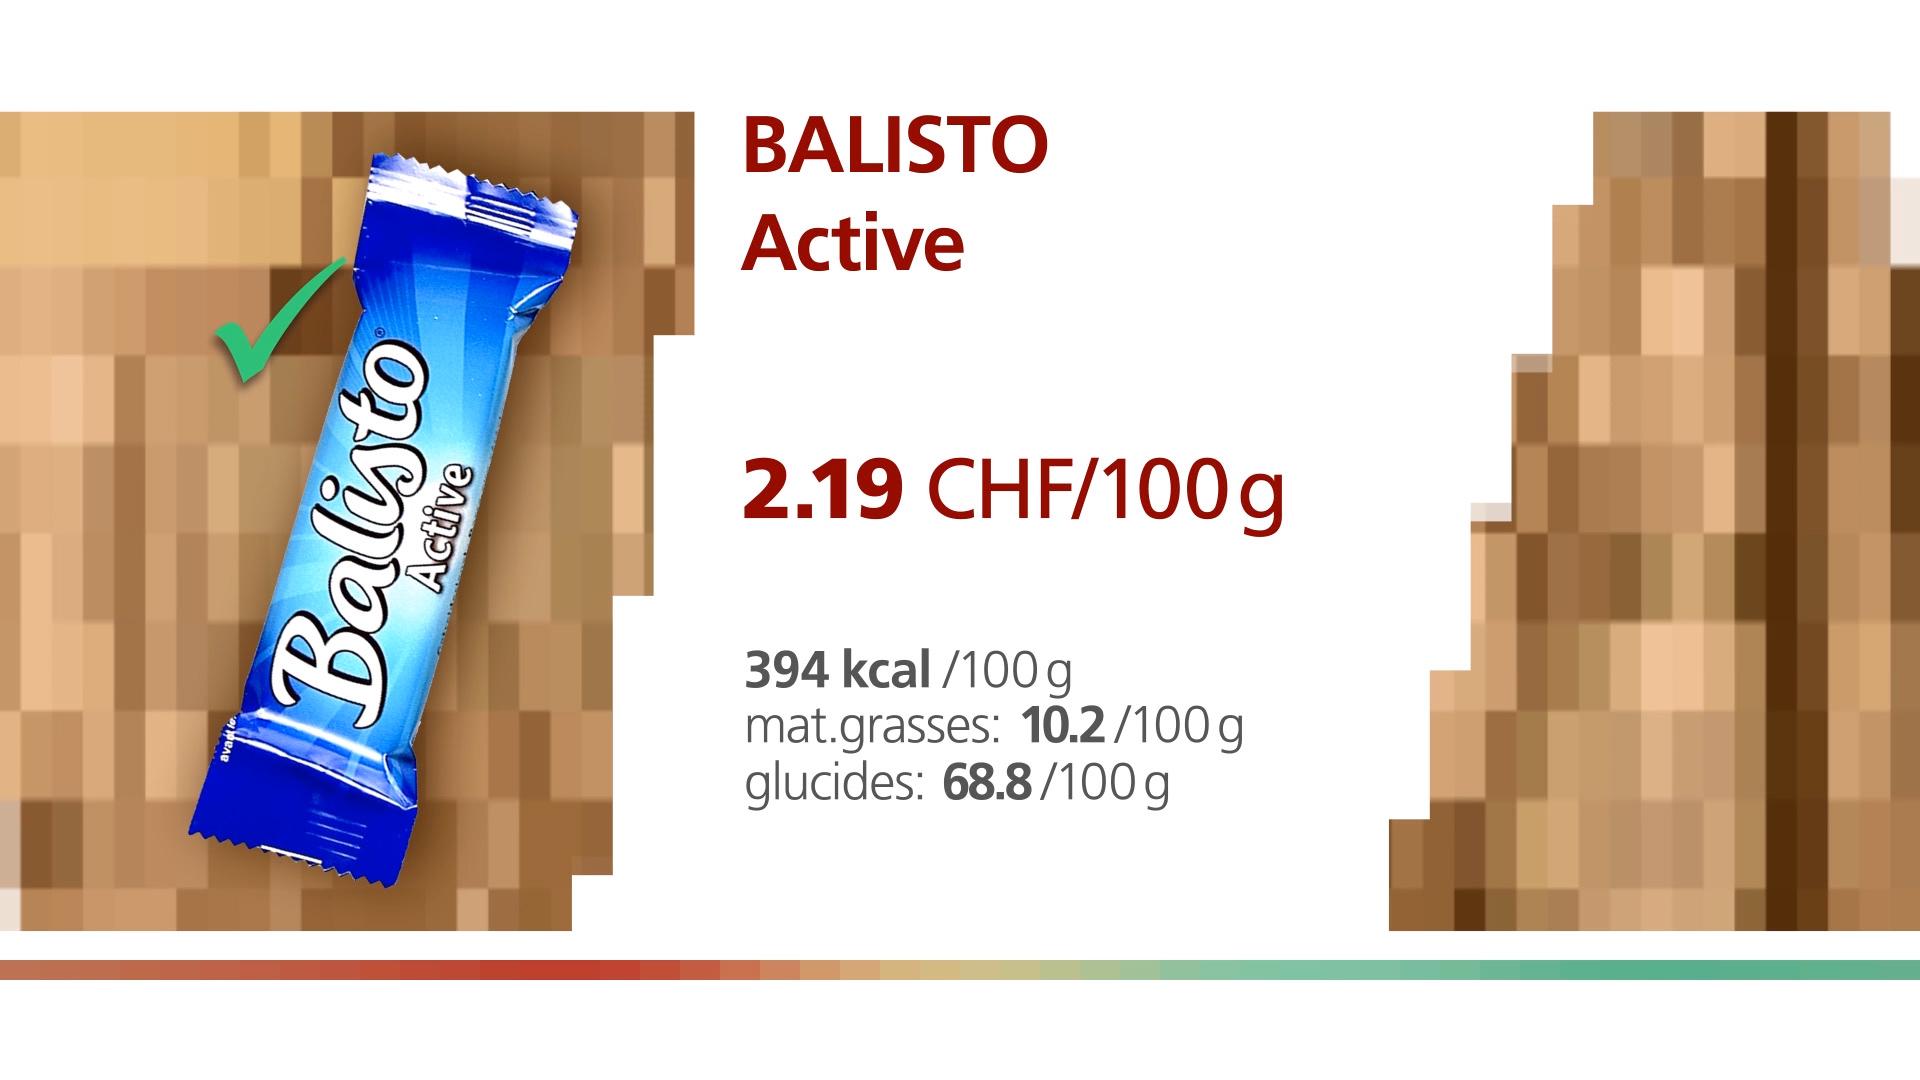 Balisto Active.